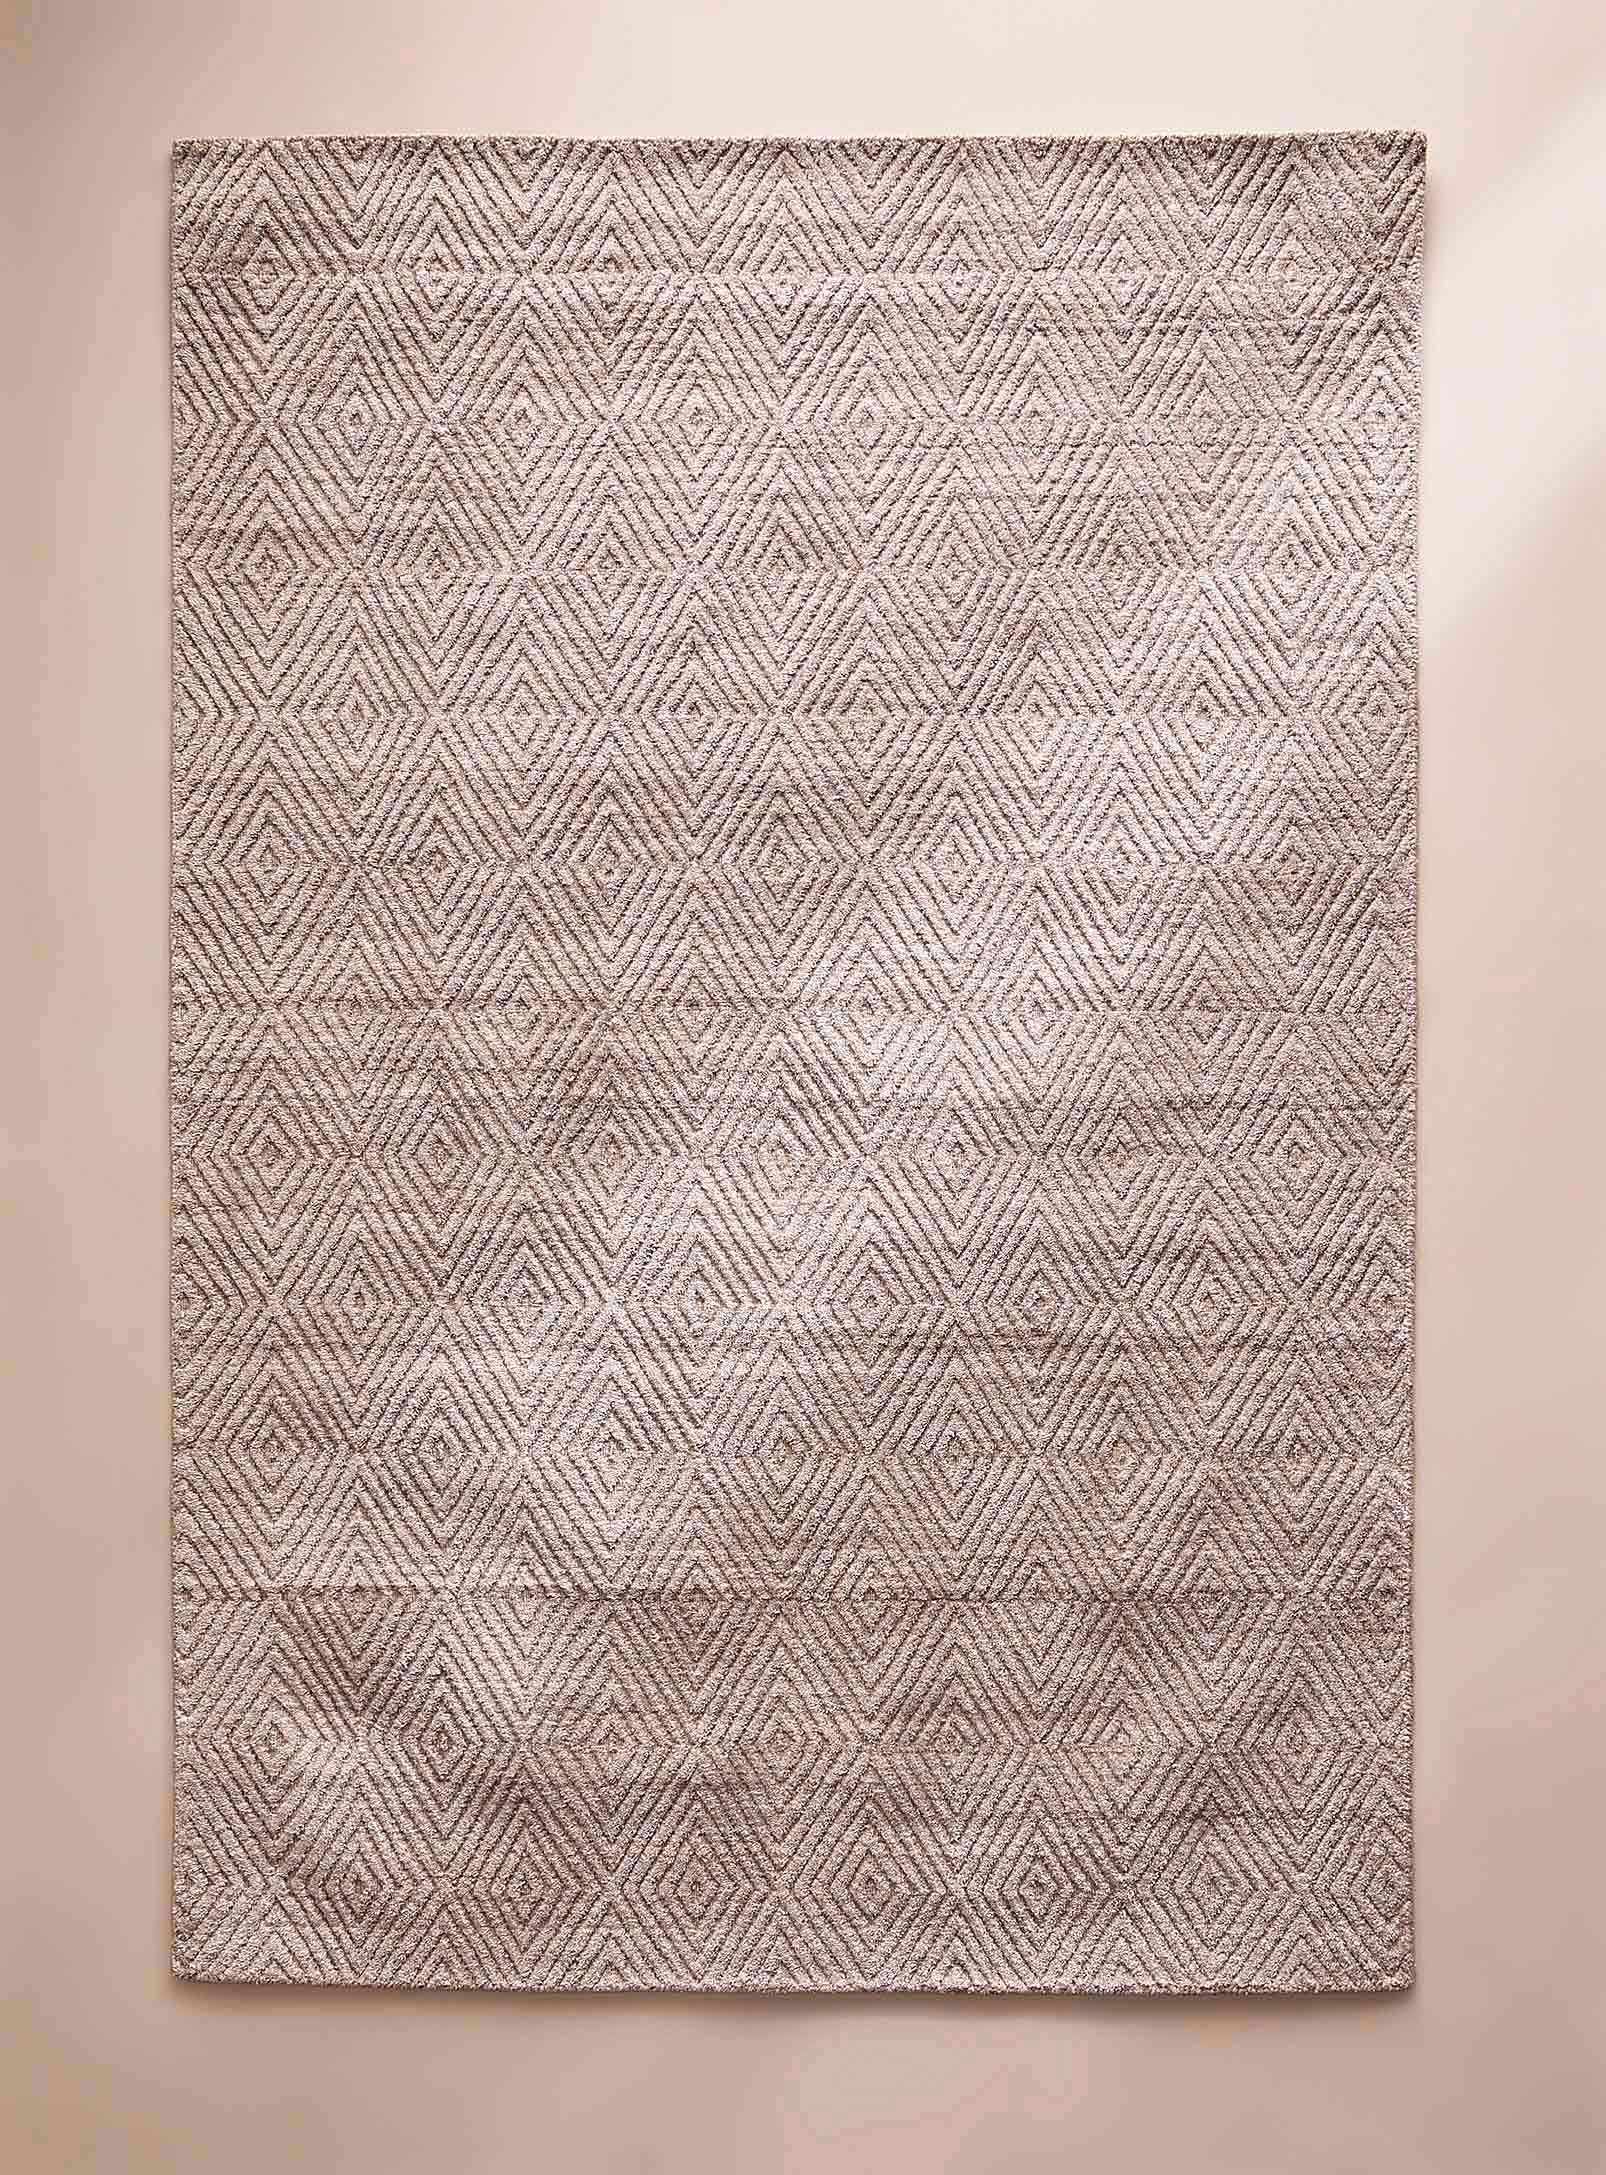 Simons Maison Heather Mosaic Artisanal Rug See Available Sizes In Grey